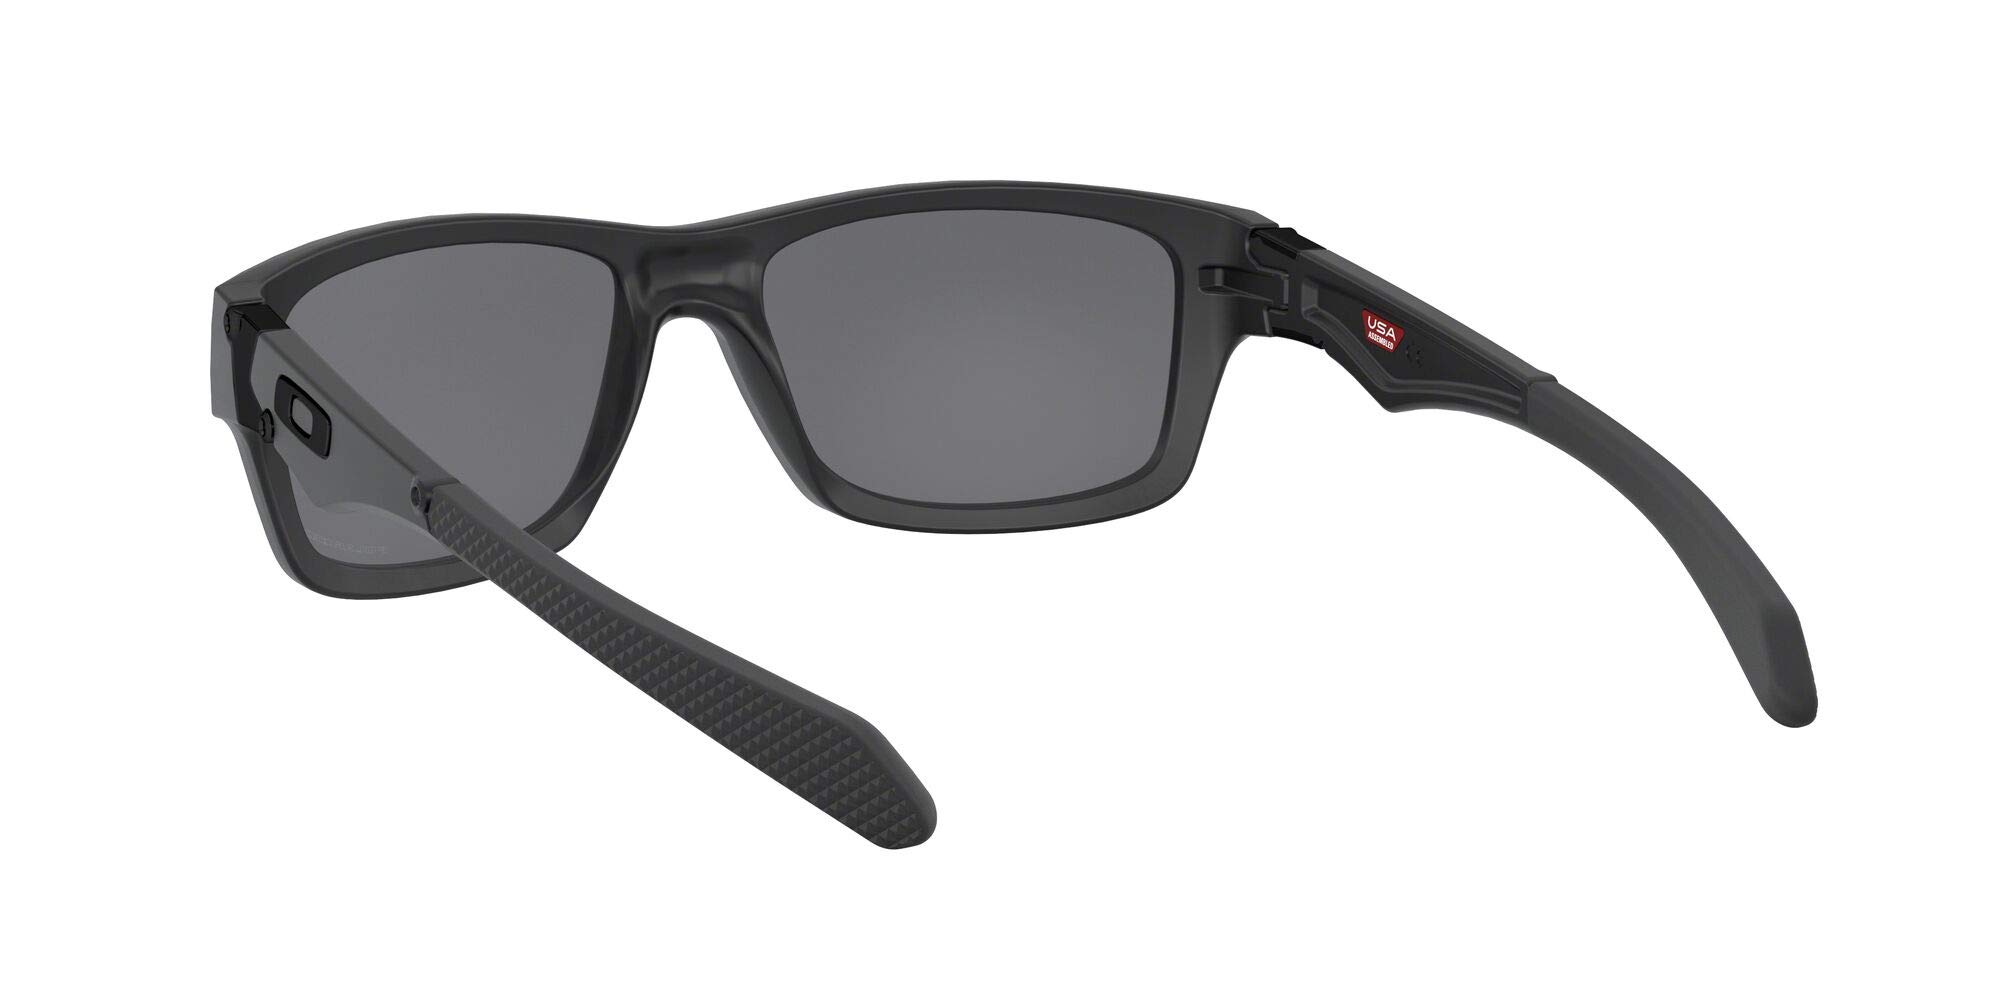 Oakley Men's 0OO9135 Jupiter Squared Rectangular Sunglasses, Matte Black/Black Iridium Polarized, 56 mm